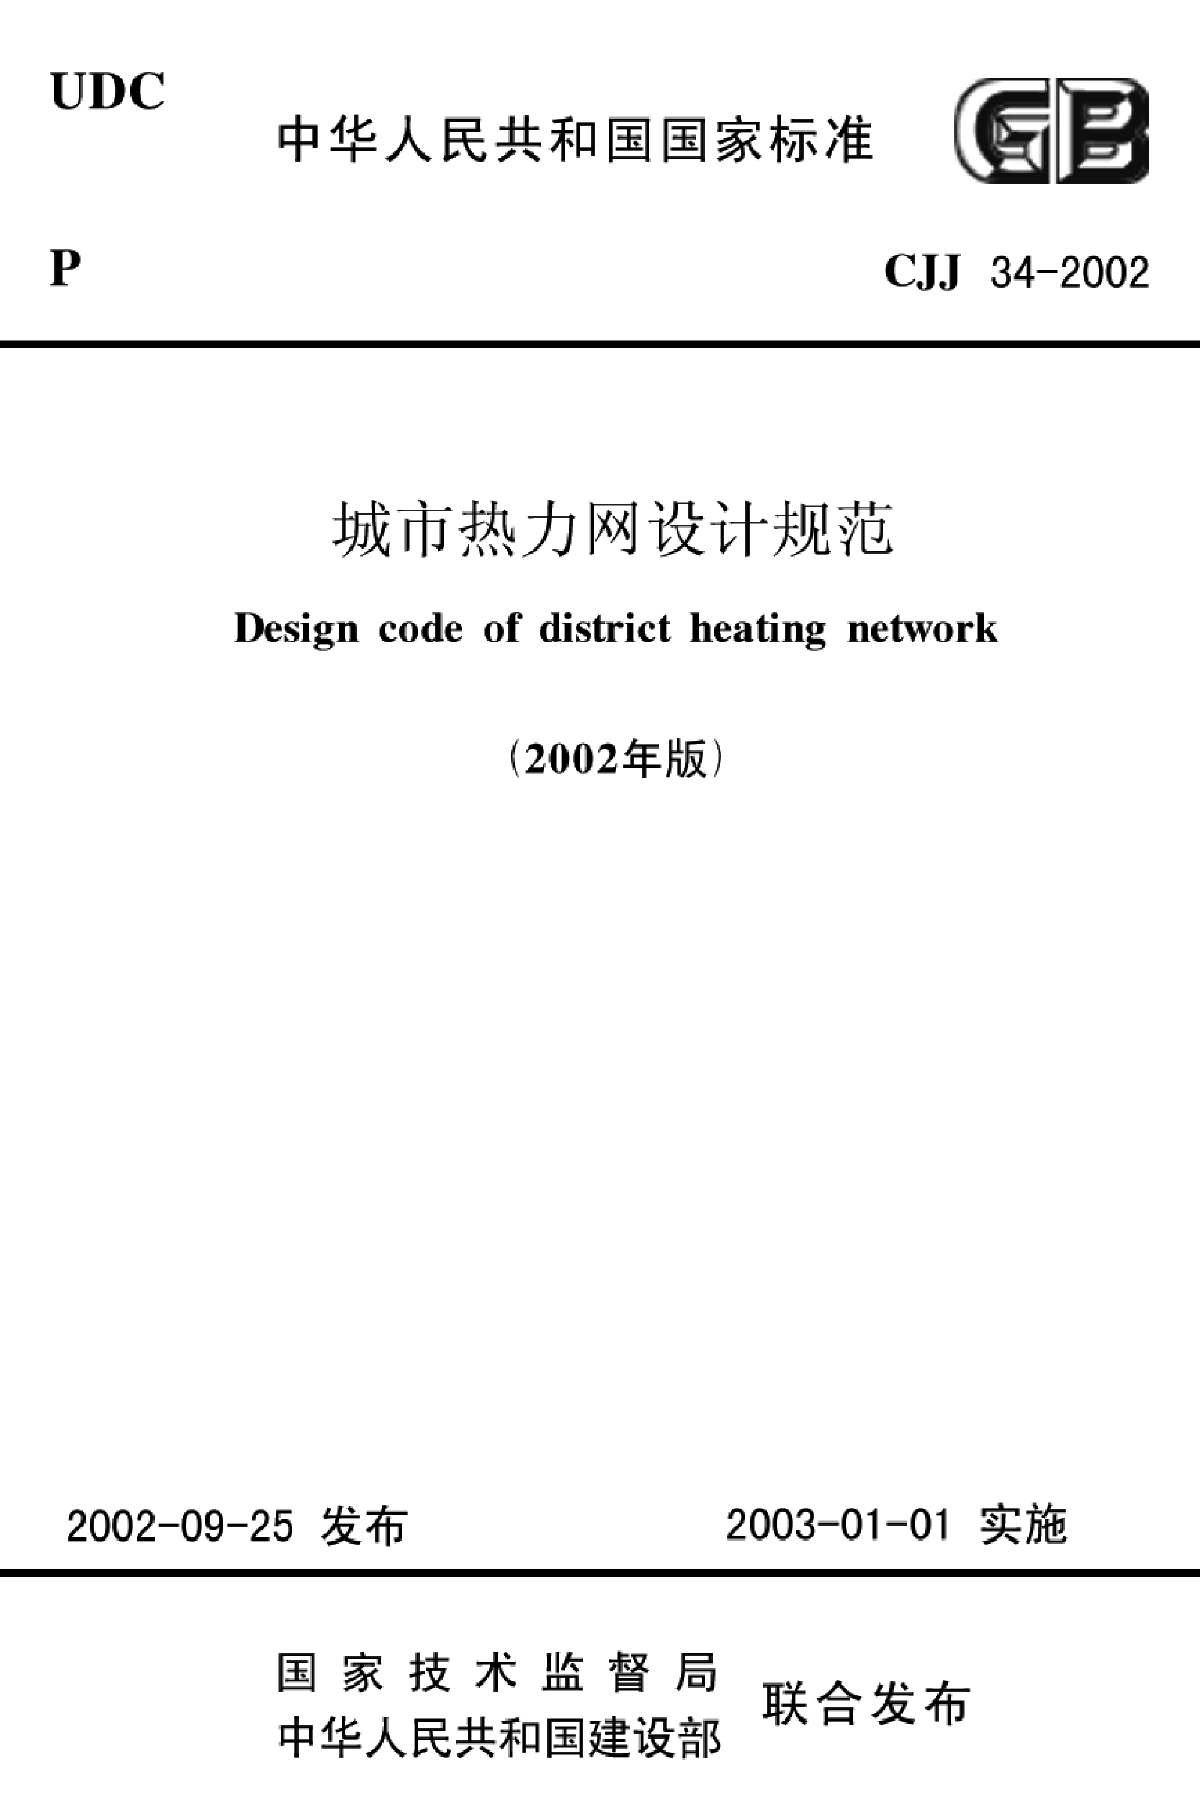 CJJ 34-2002城市热力网设计规范